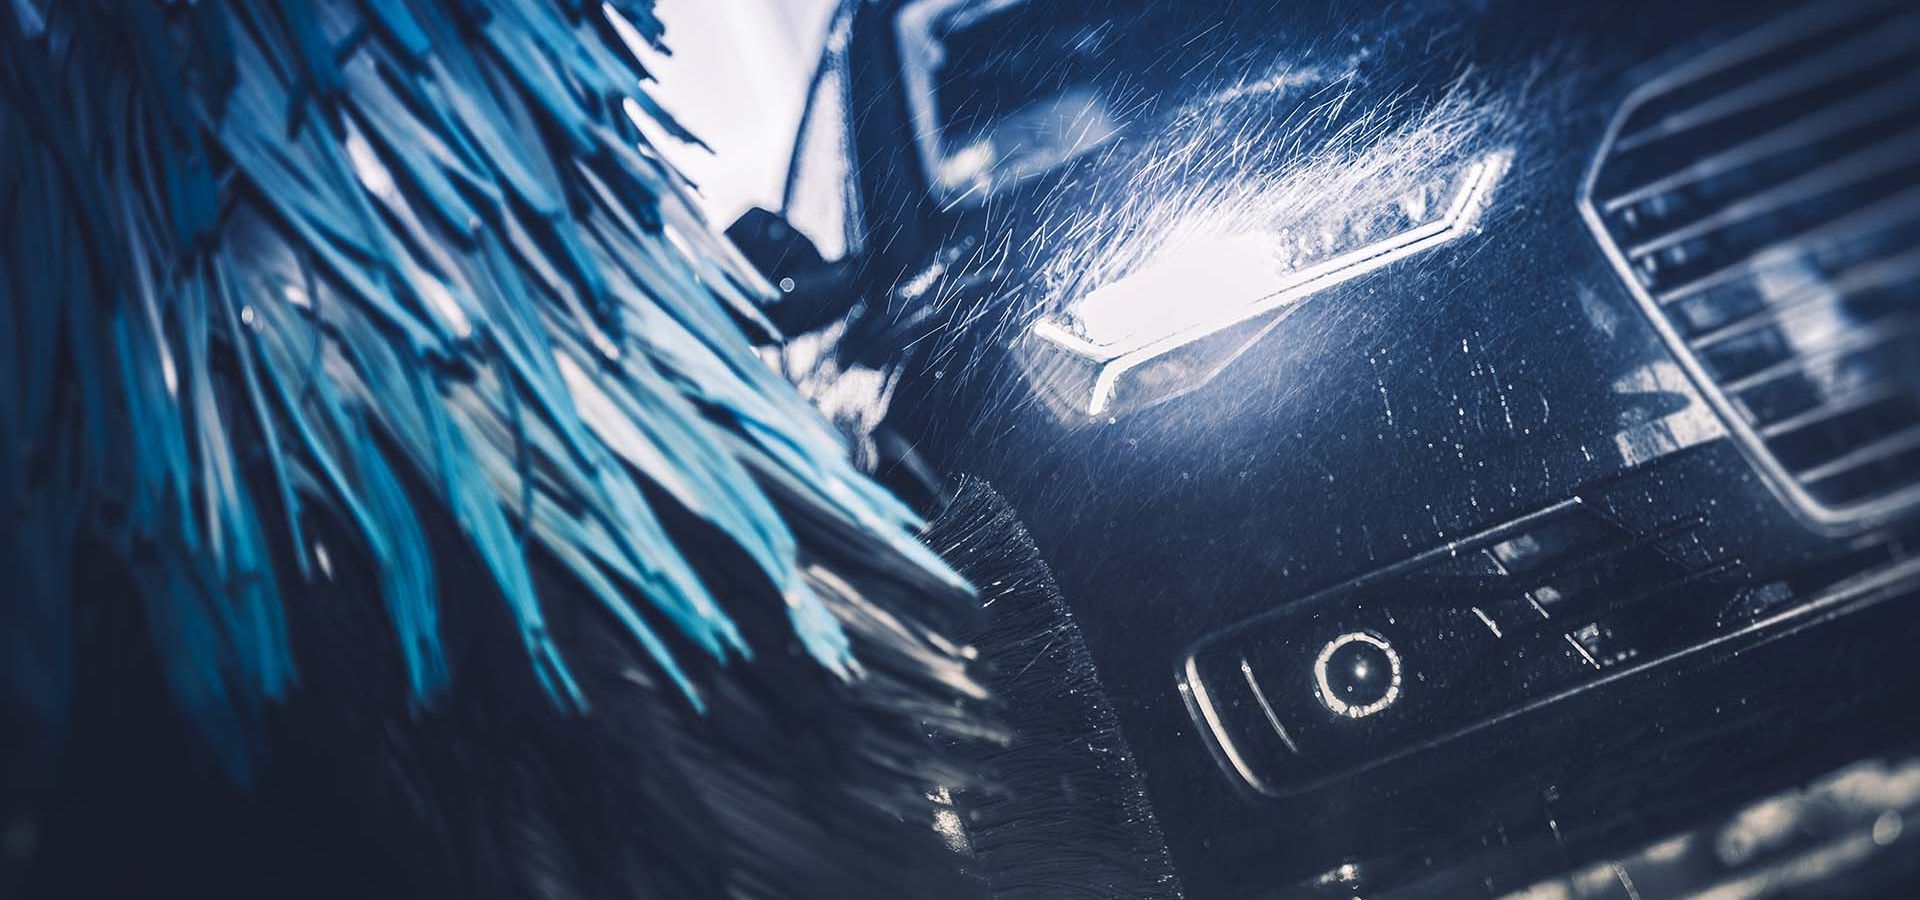 Autolavaggio Shiny Car Wash - Trattamento pulizia e protezione sedili in  pelle Audi S5💪🏽🚘 #cardetailing #detailer #detailing #audiitalia #audis5  #shinycarwash